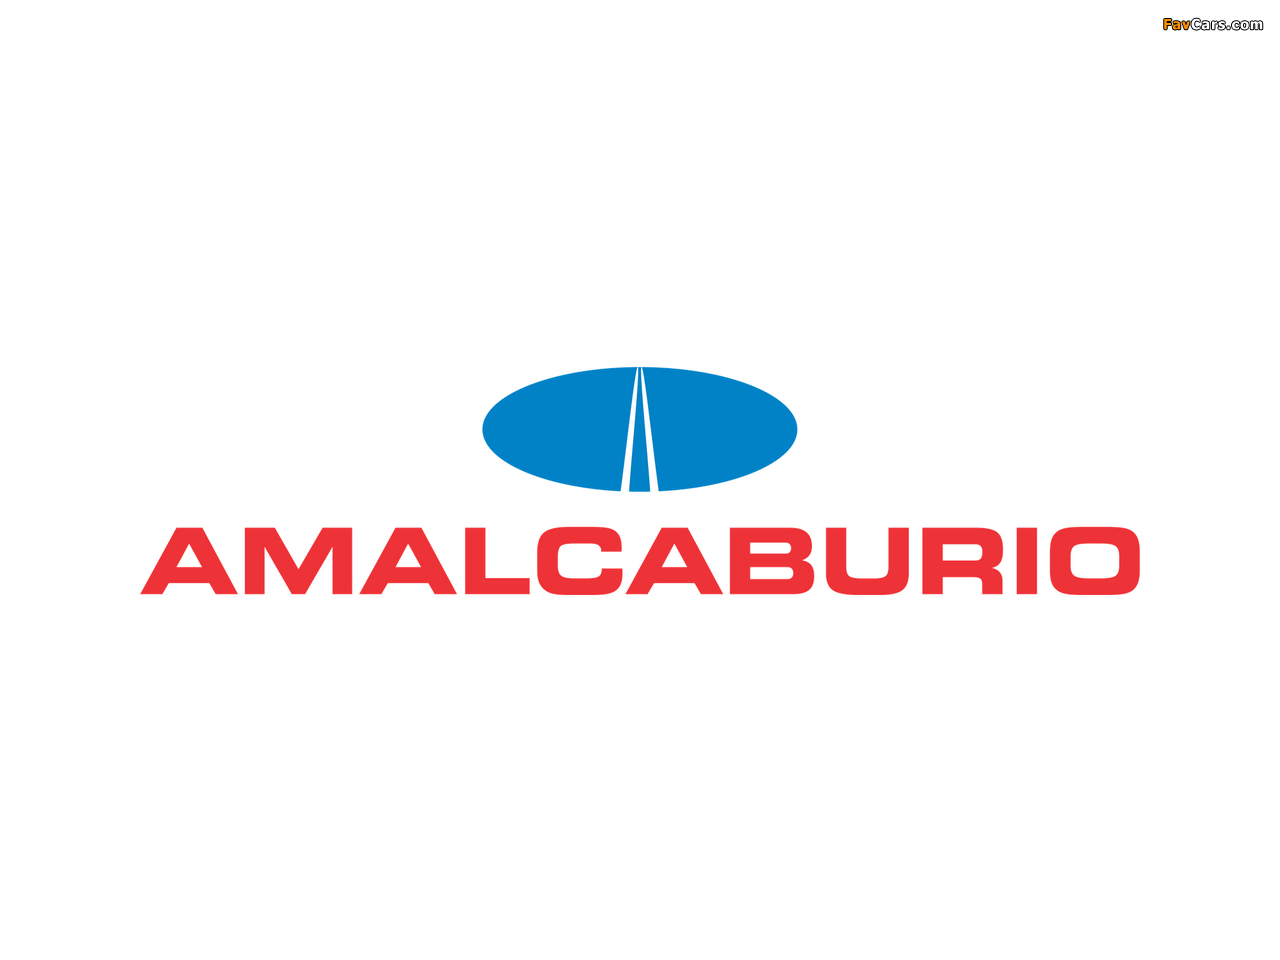 Amalcaburio images (1280 x 960)